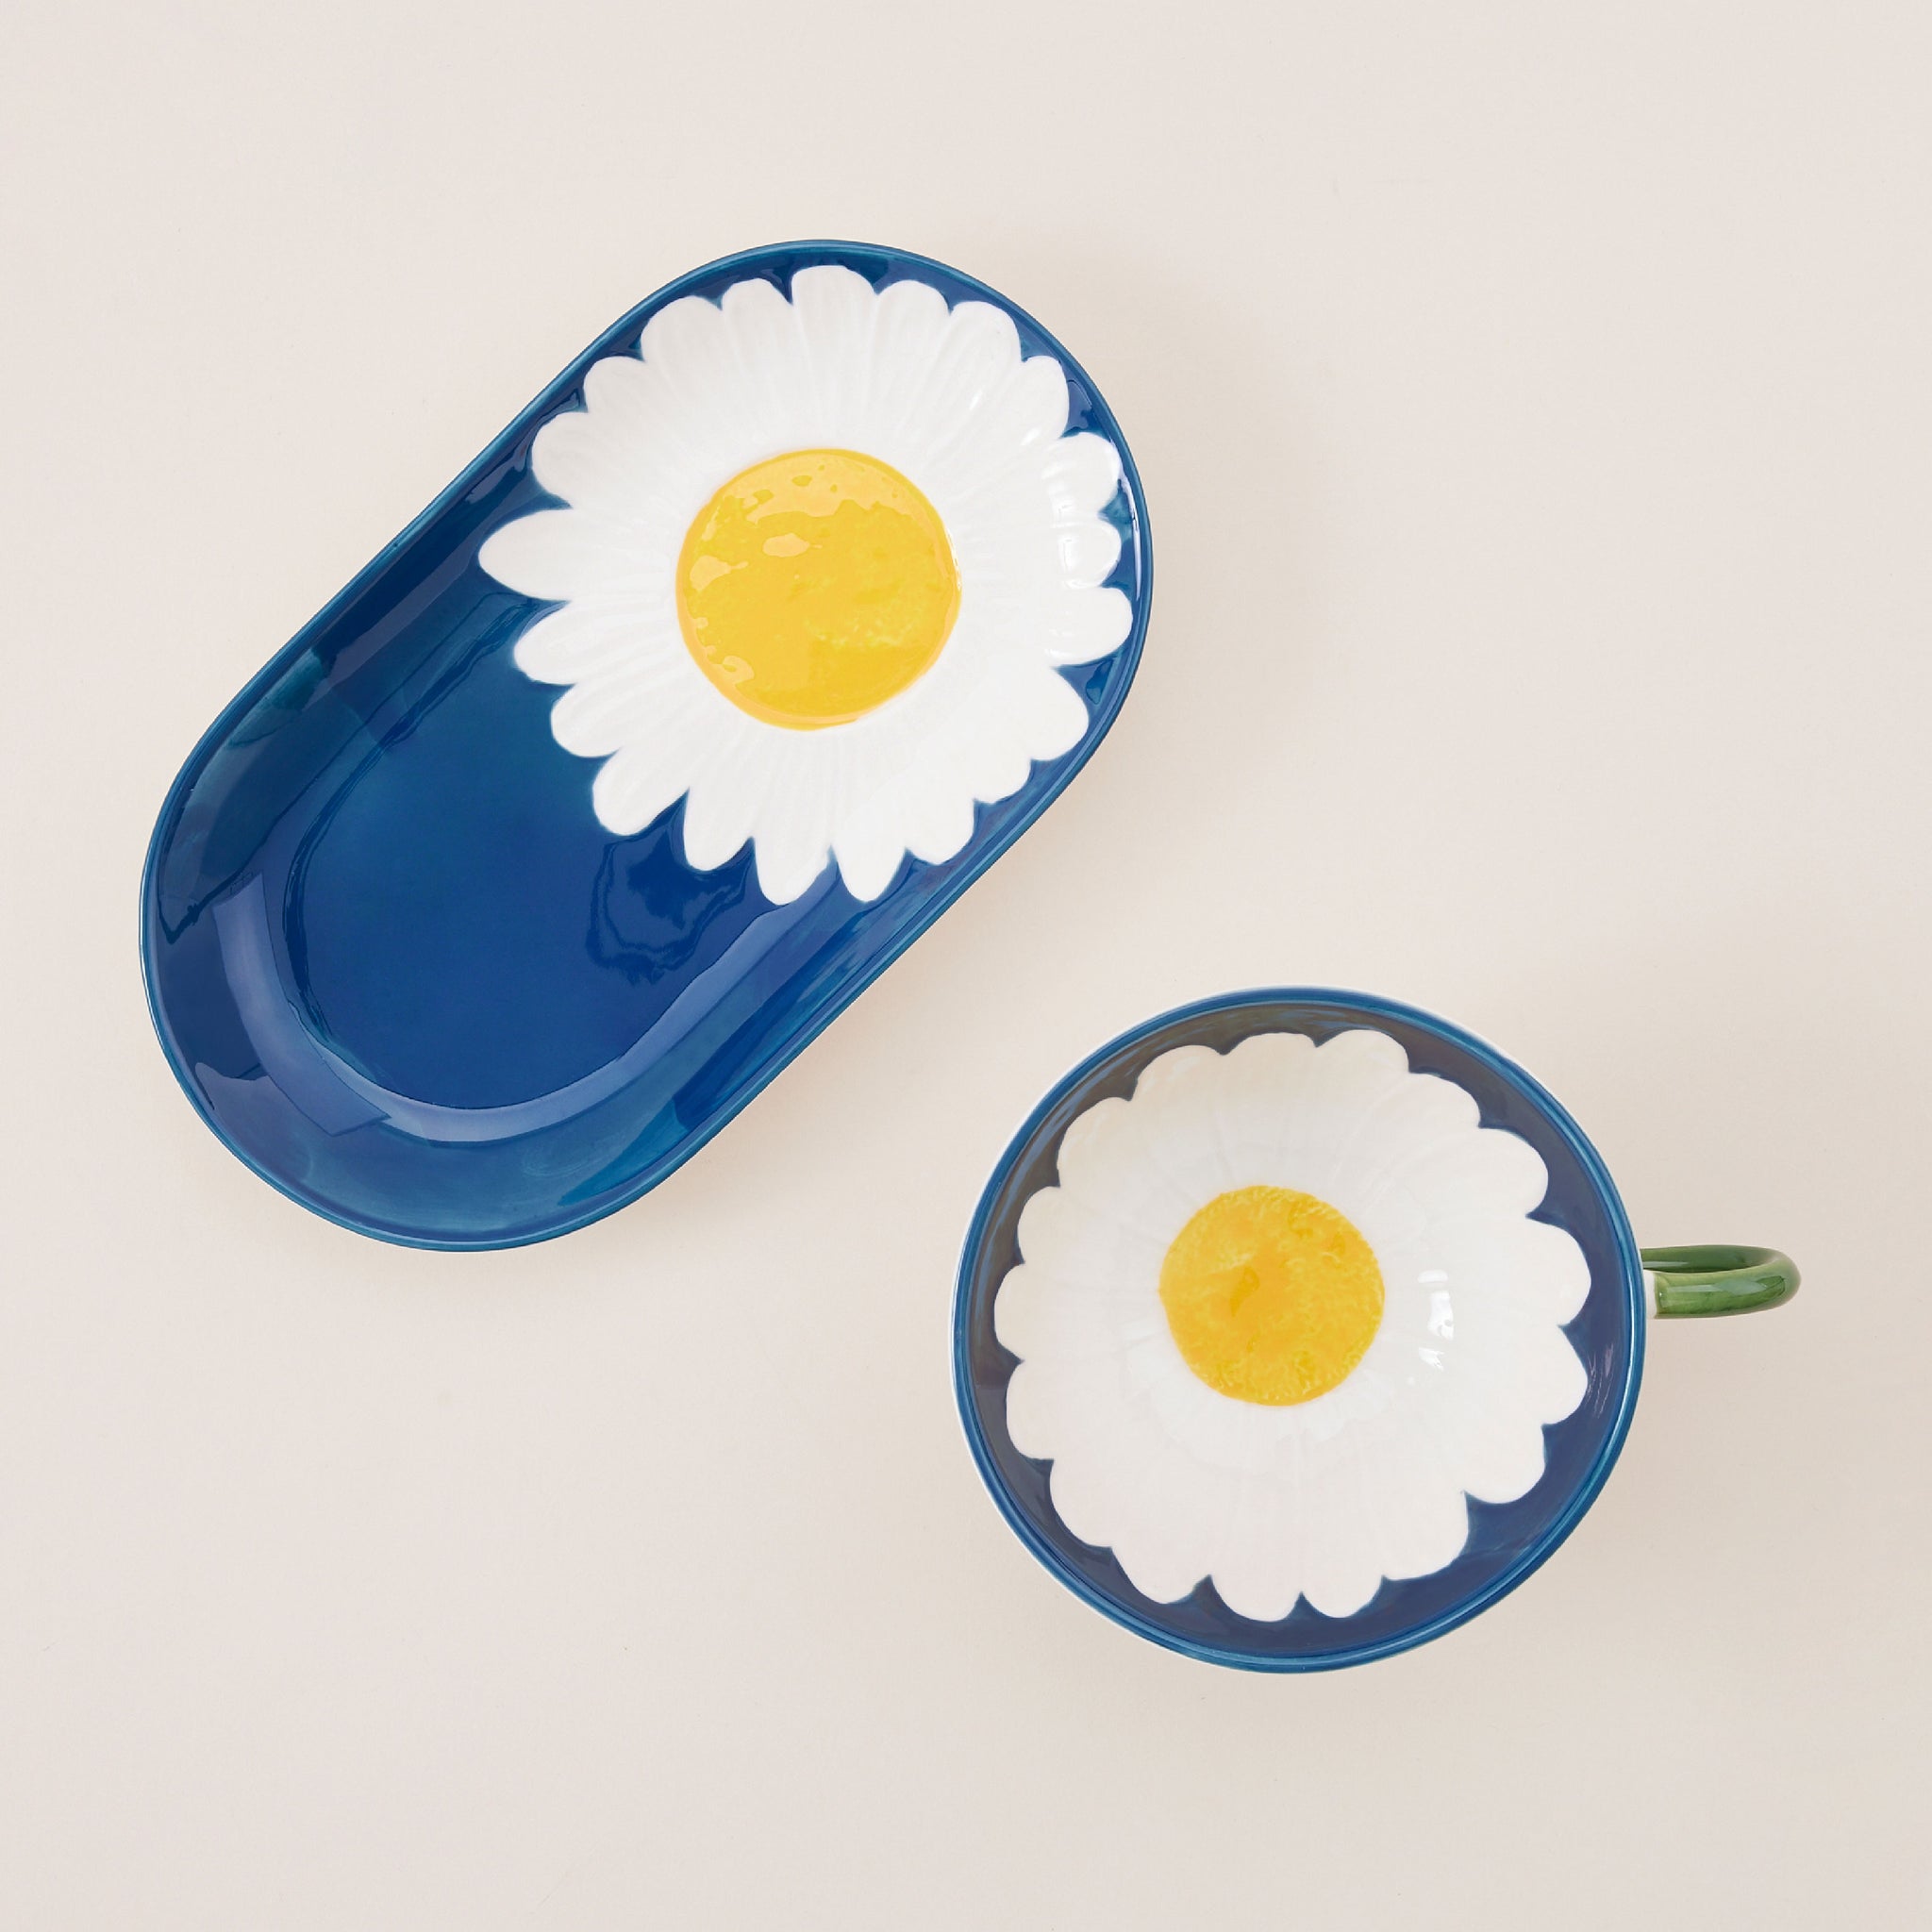 Daisy Breakfast Cup & Dish | ชุดถ้วยเซรามิก พร้อมจานรอง